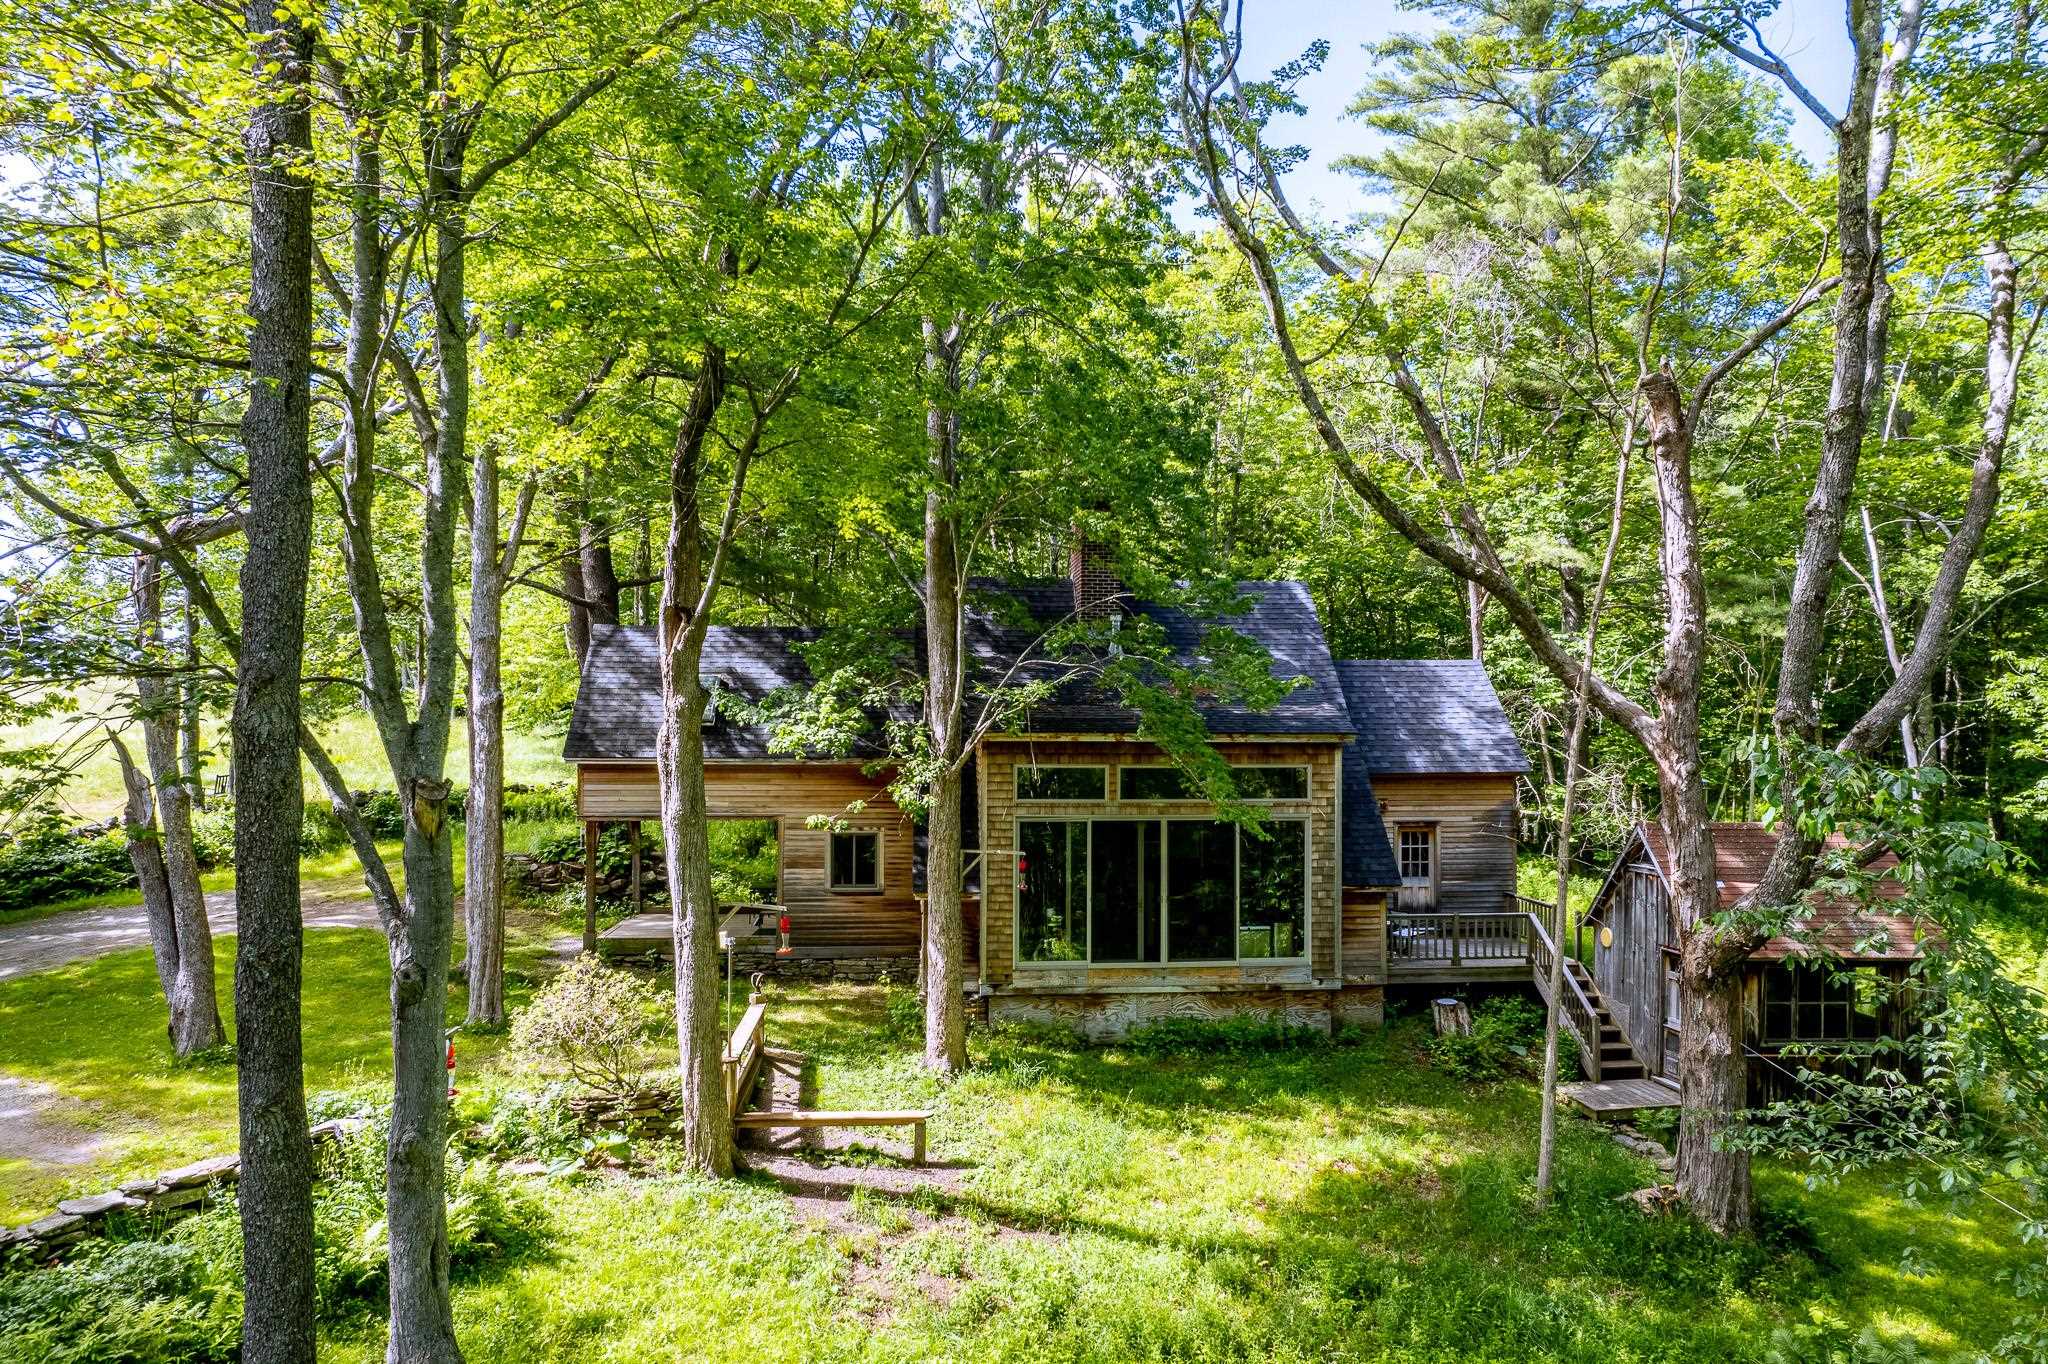 Owner-built home in beautiful, private rural setting